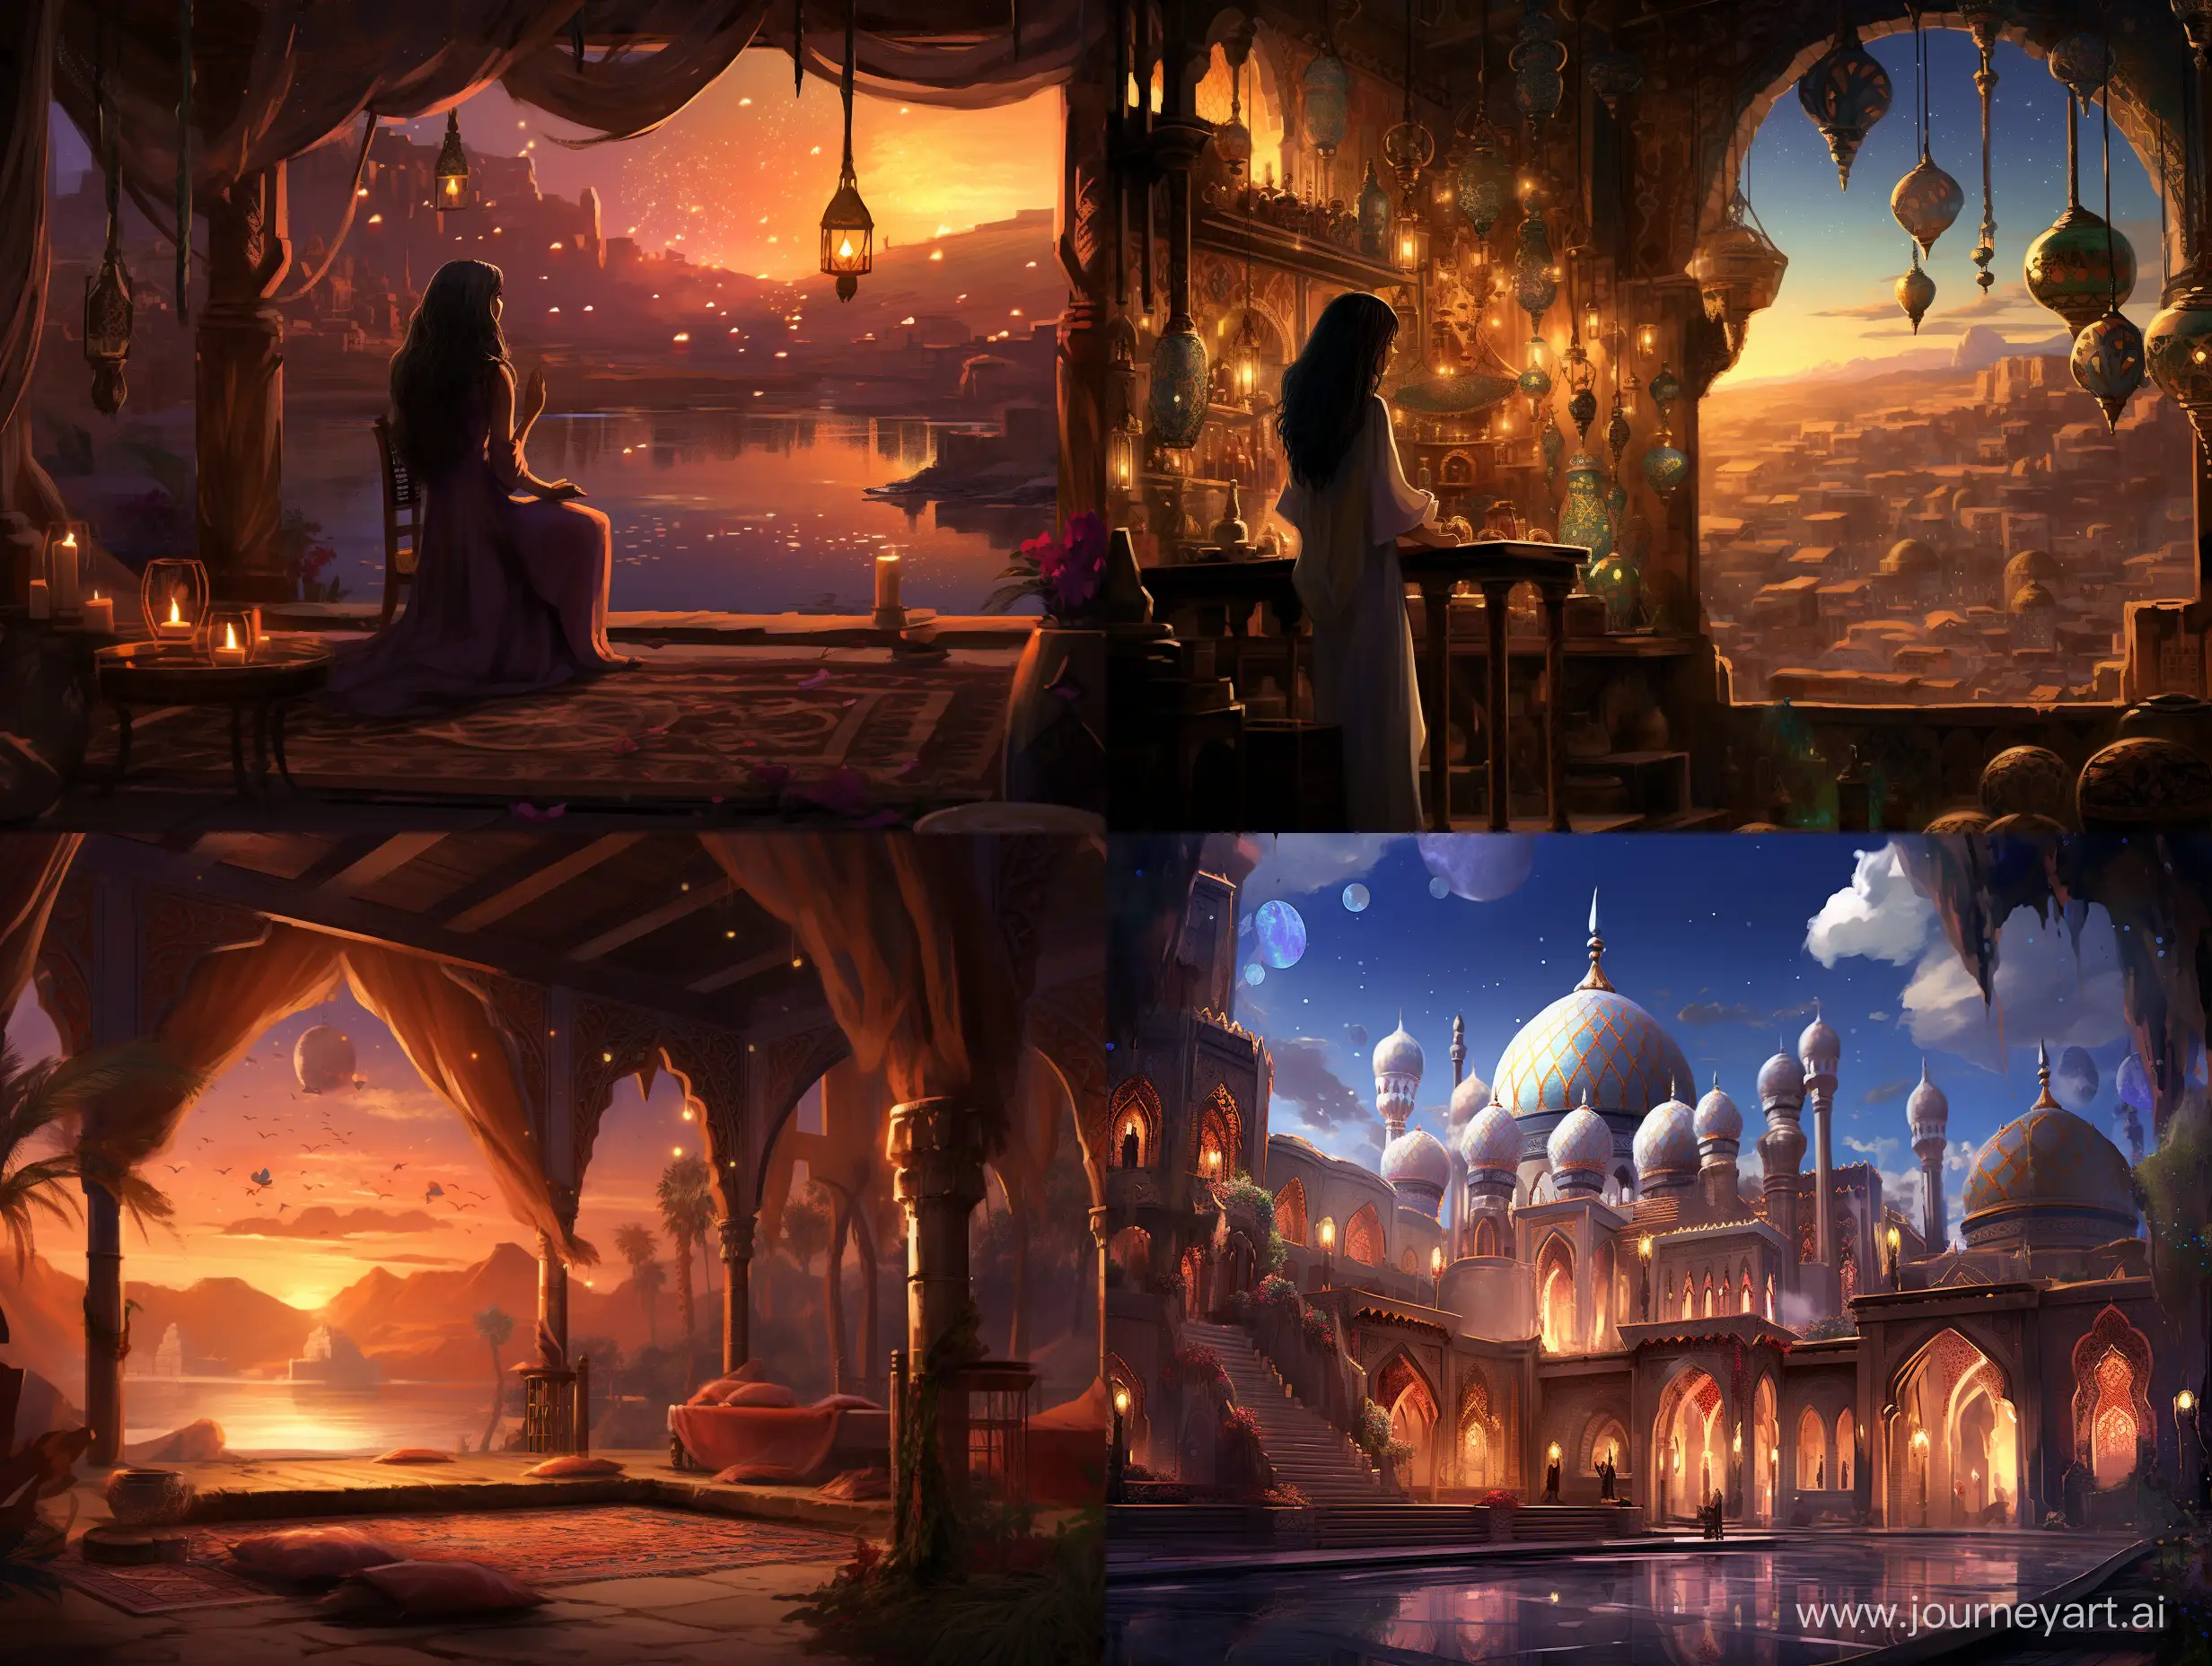 Enchanting-Fairytale-Scene-with-Magic-Wand-in-Arabian-Atmosphere